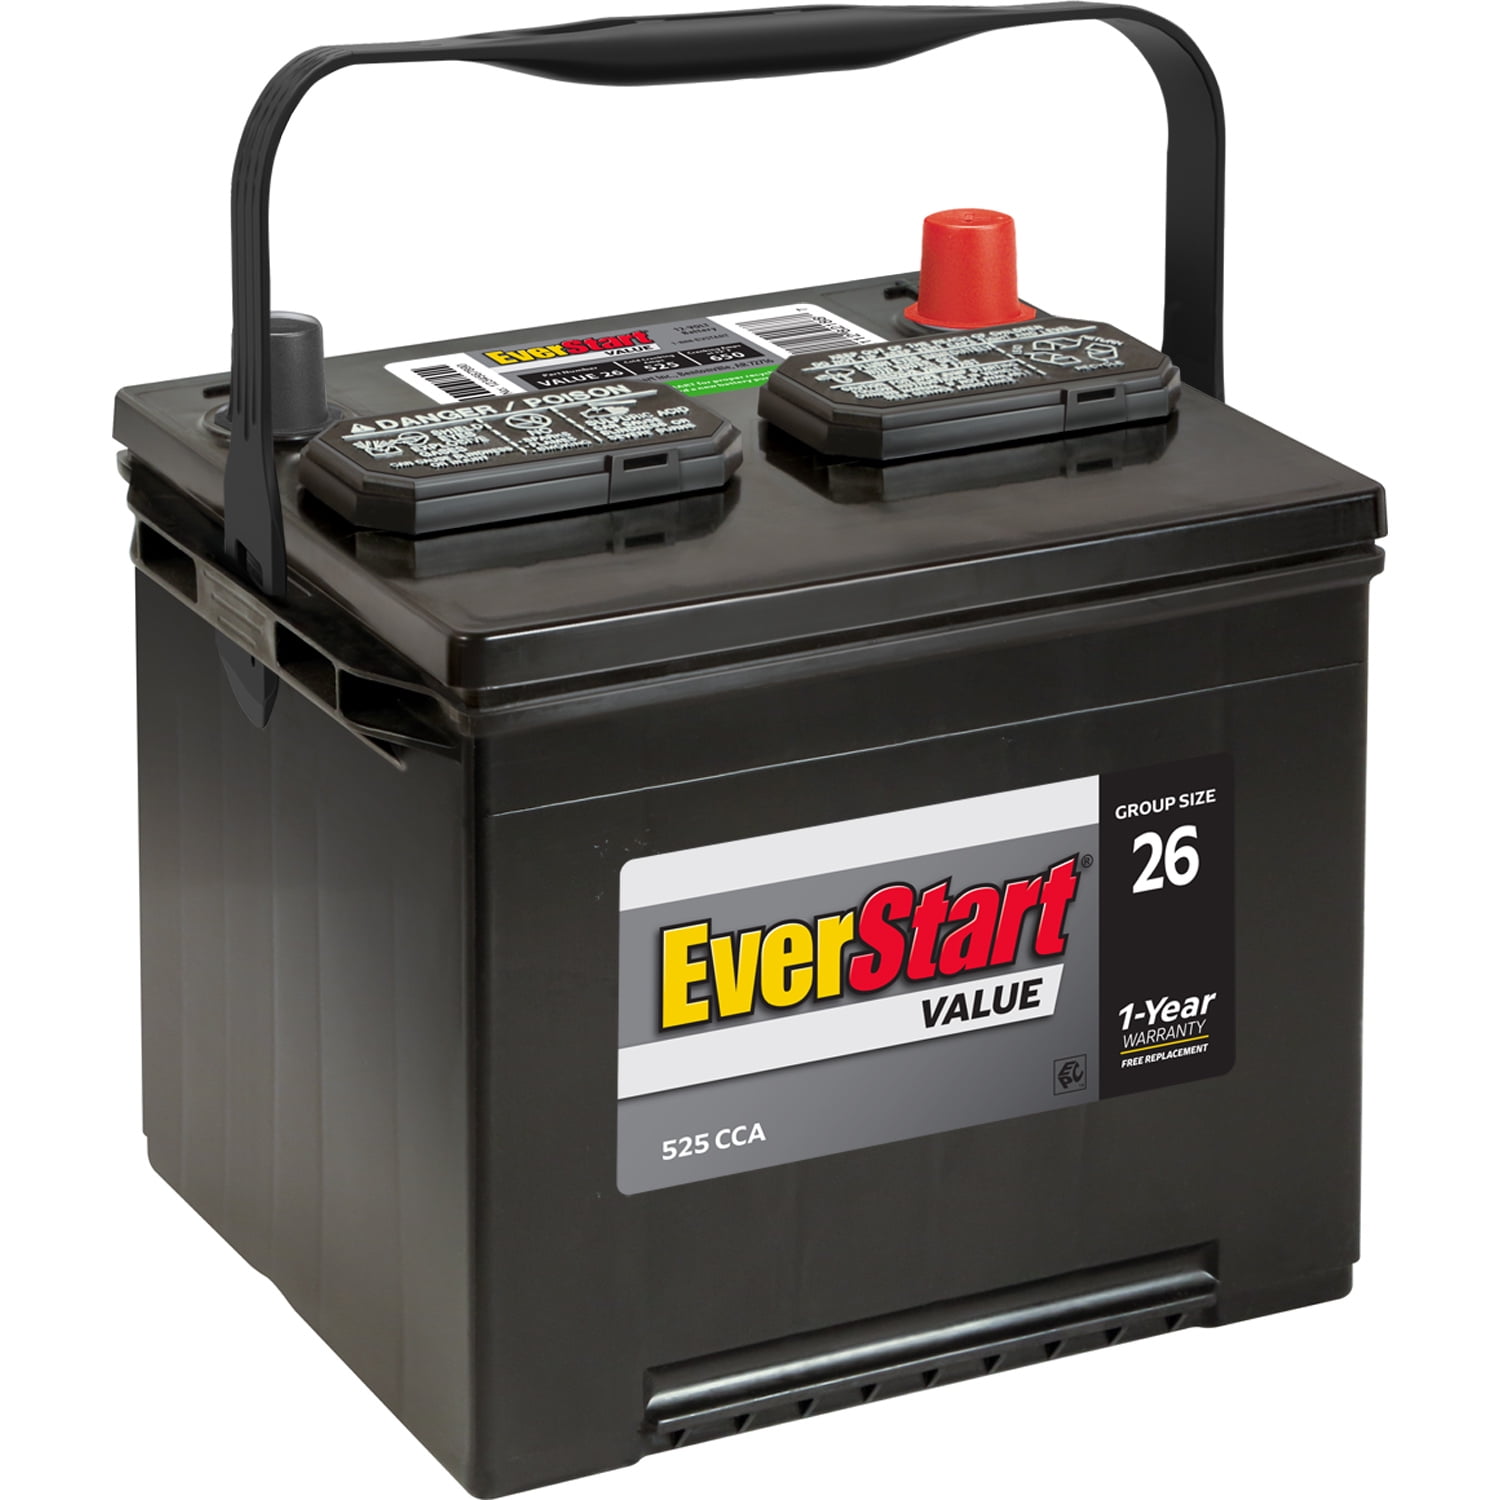 EverStart Value Lead Acid Automotive Battery, Group Size 26 (12 Volt / 525 CCA)